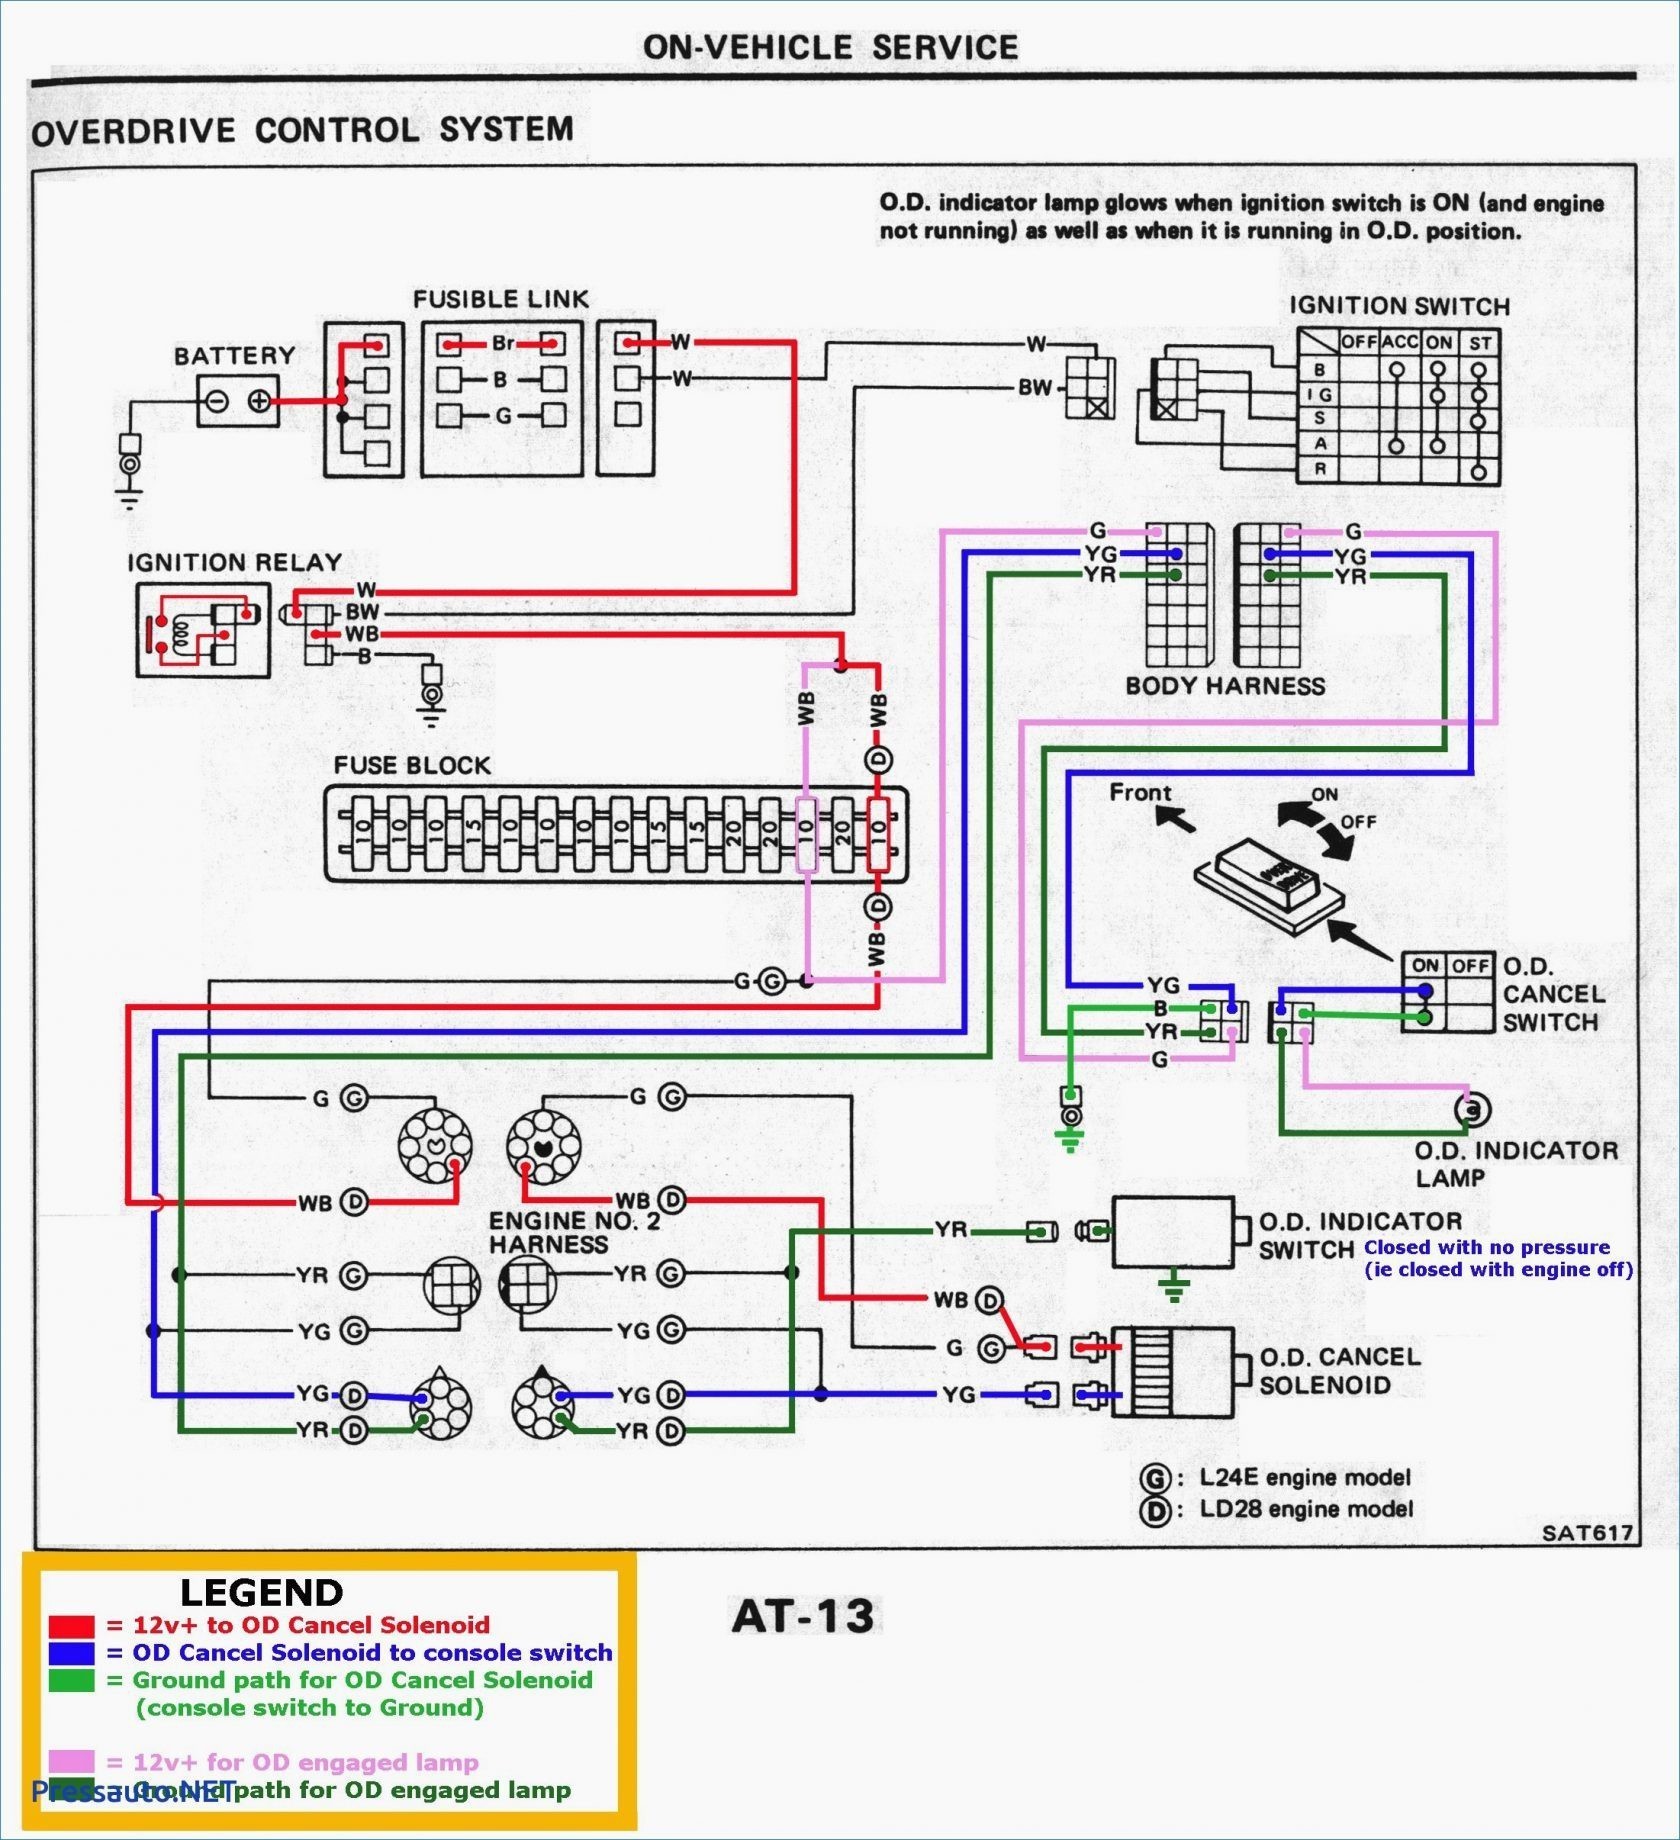 Turn Signal Flasher Wiring Diagram Neon Wiring Diagram Of Turn Signal Flasher Wiring Diagram